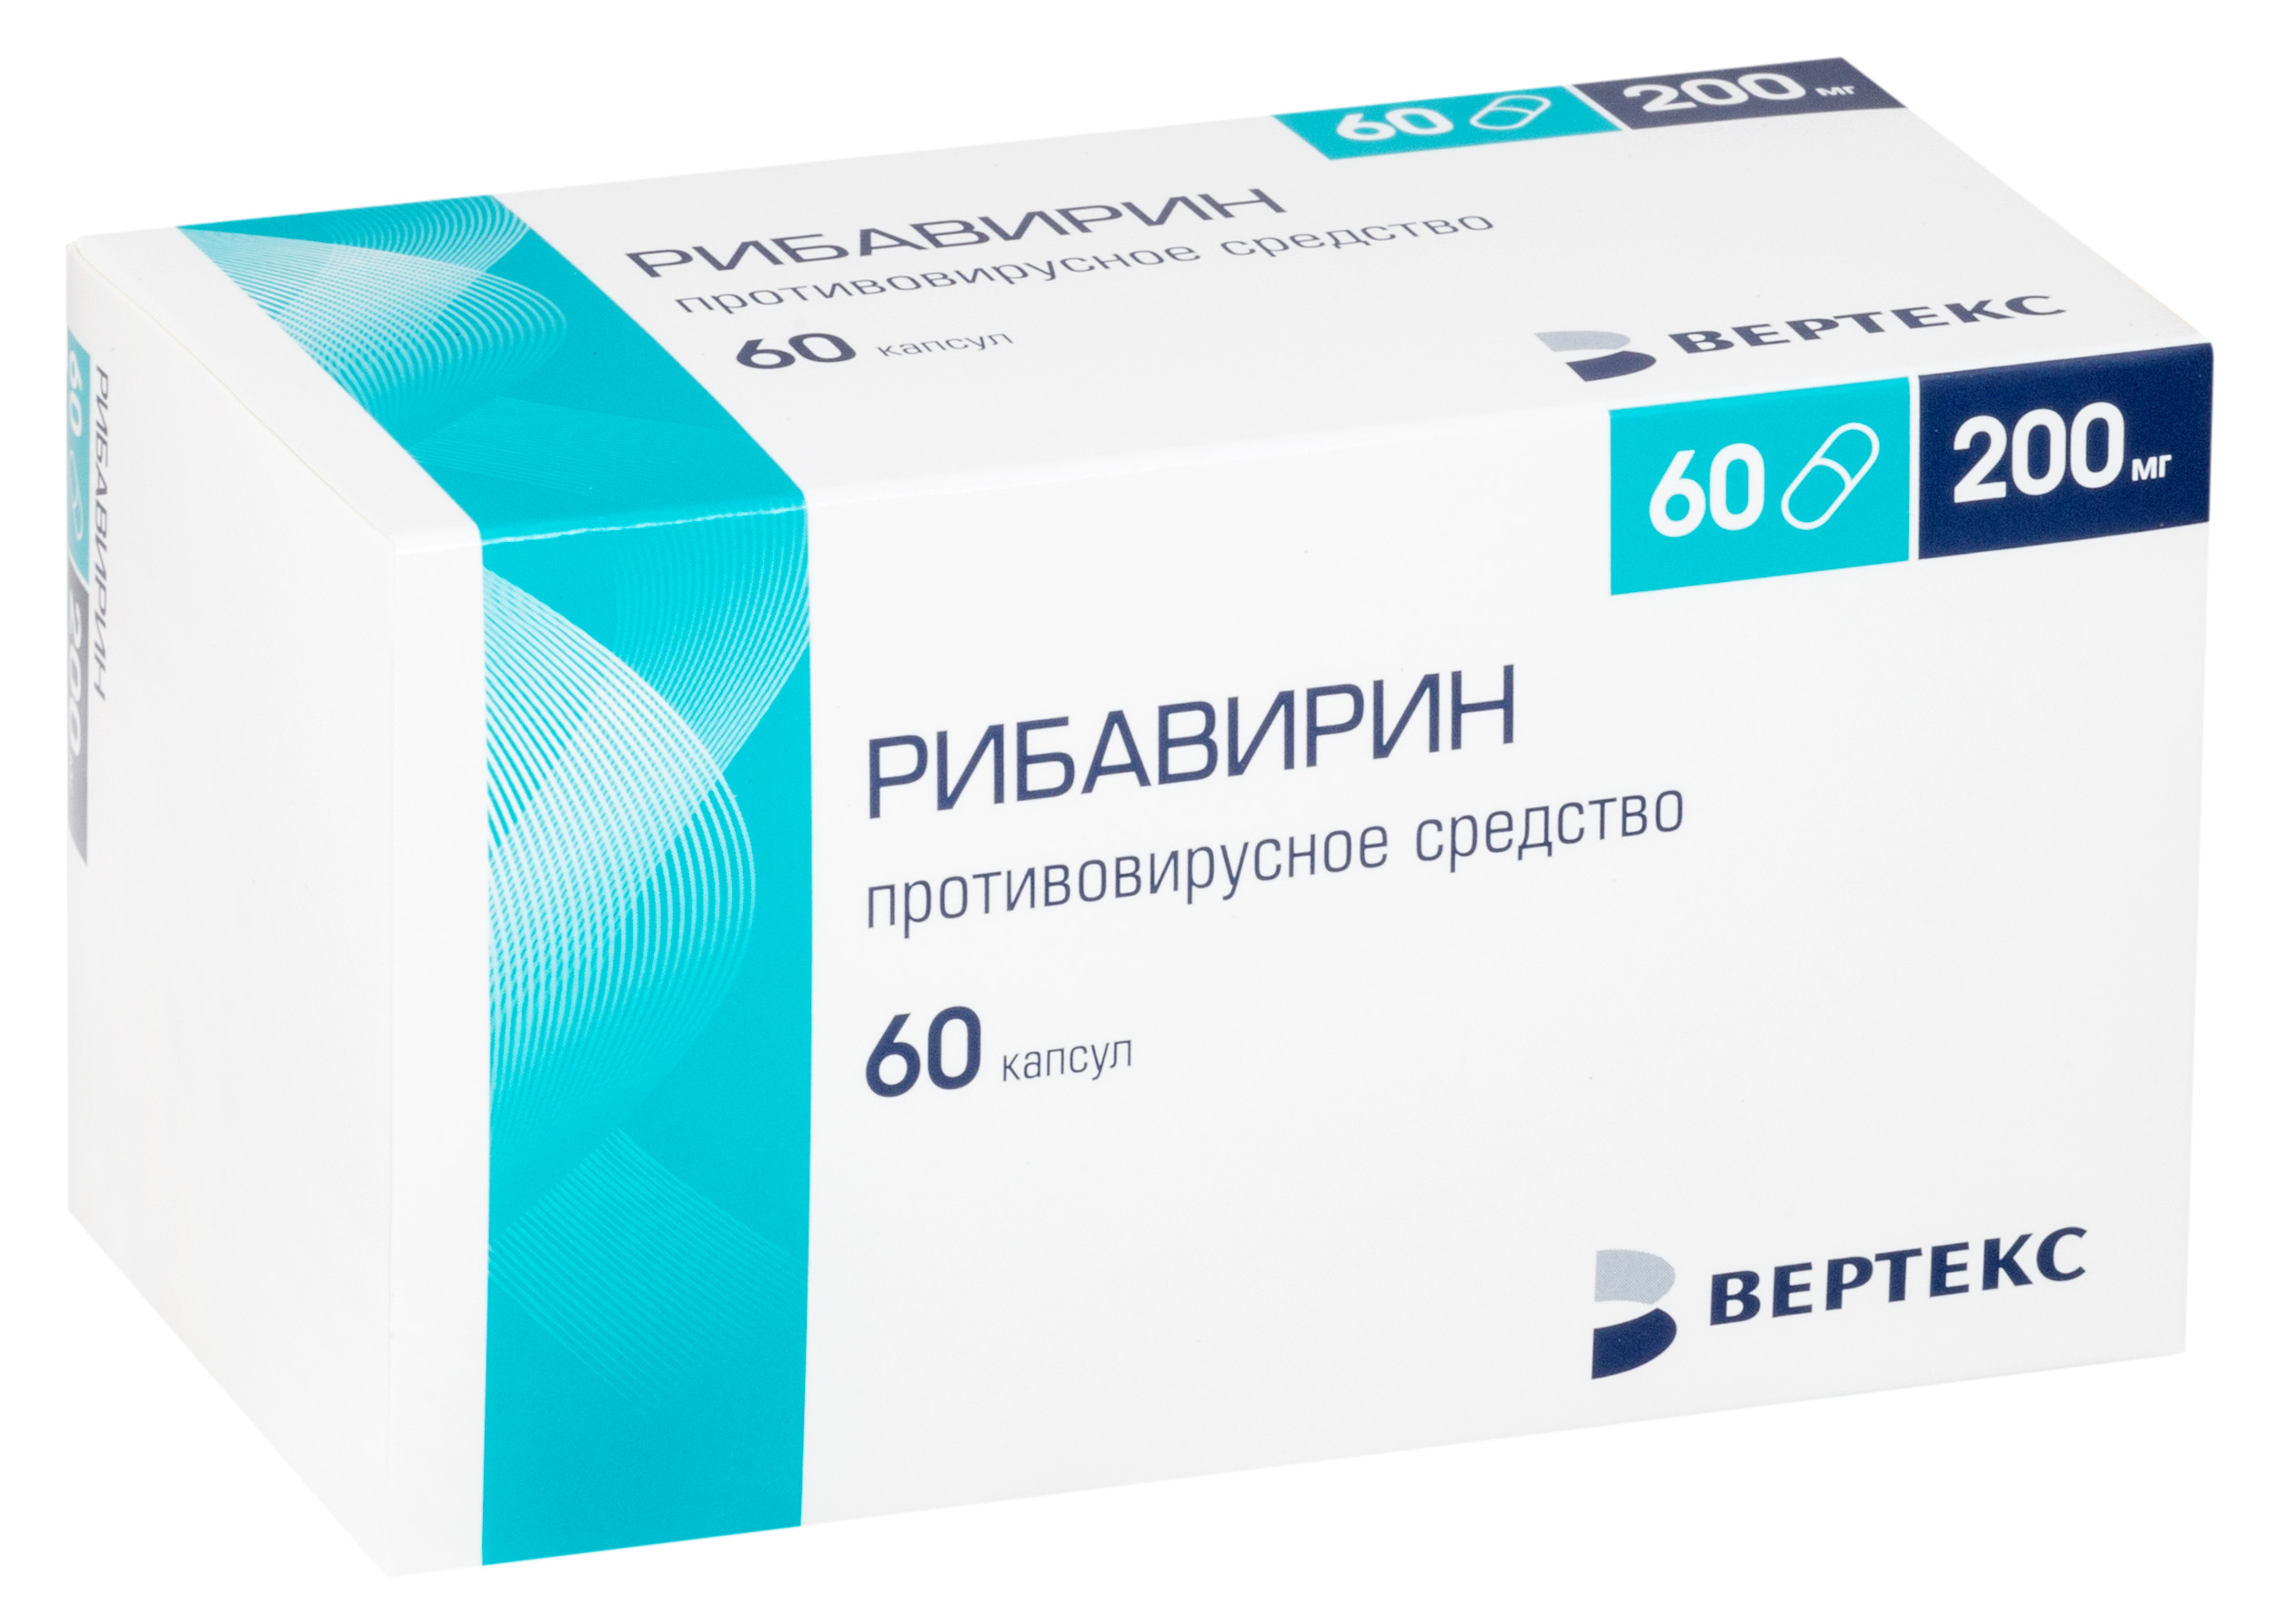 Рибавирин капс. 200 мг №60